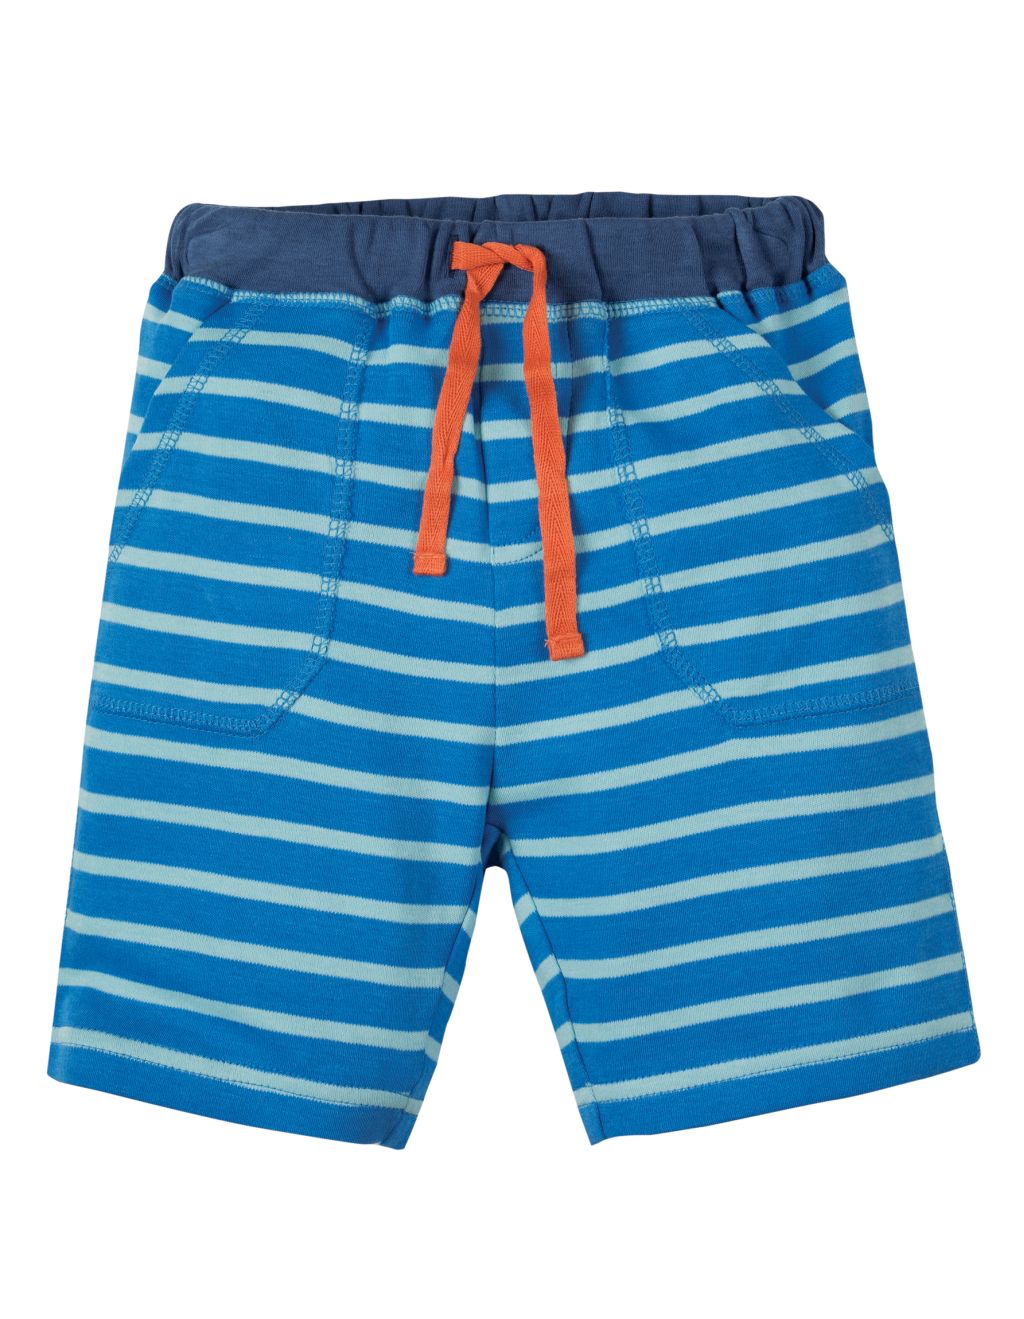 Little Stripy Shorts Sail Blue Breton